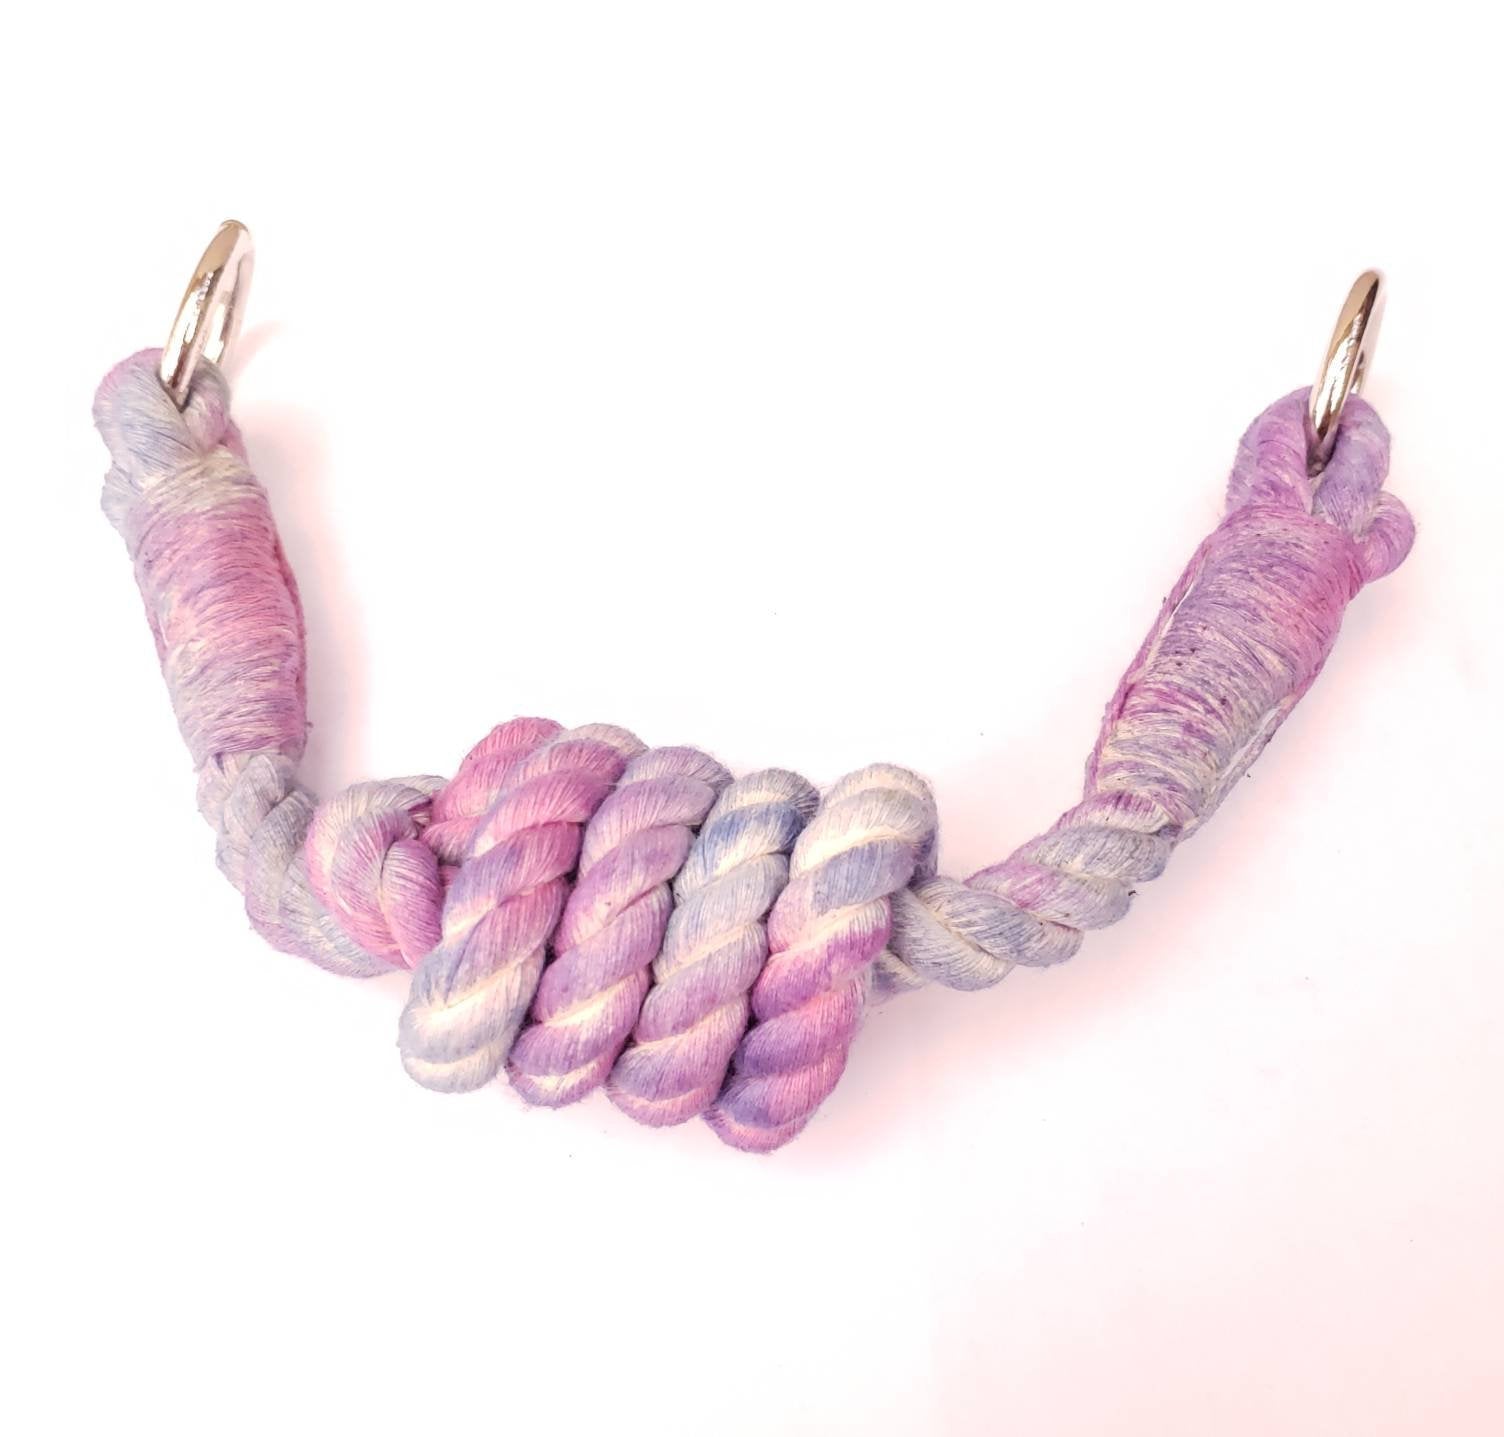 Cotton Candy Large Rope Bit Gag, 100% Cotton Rope BDSM Gag | Vixen's Hidden Desires